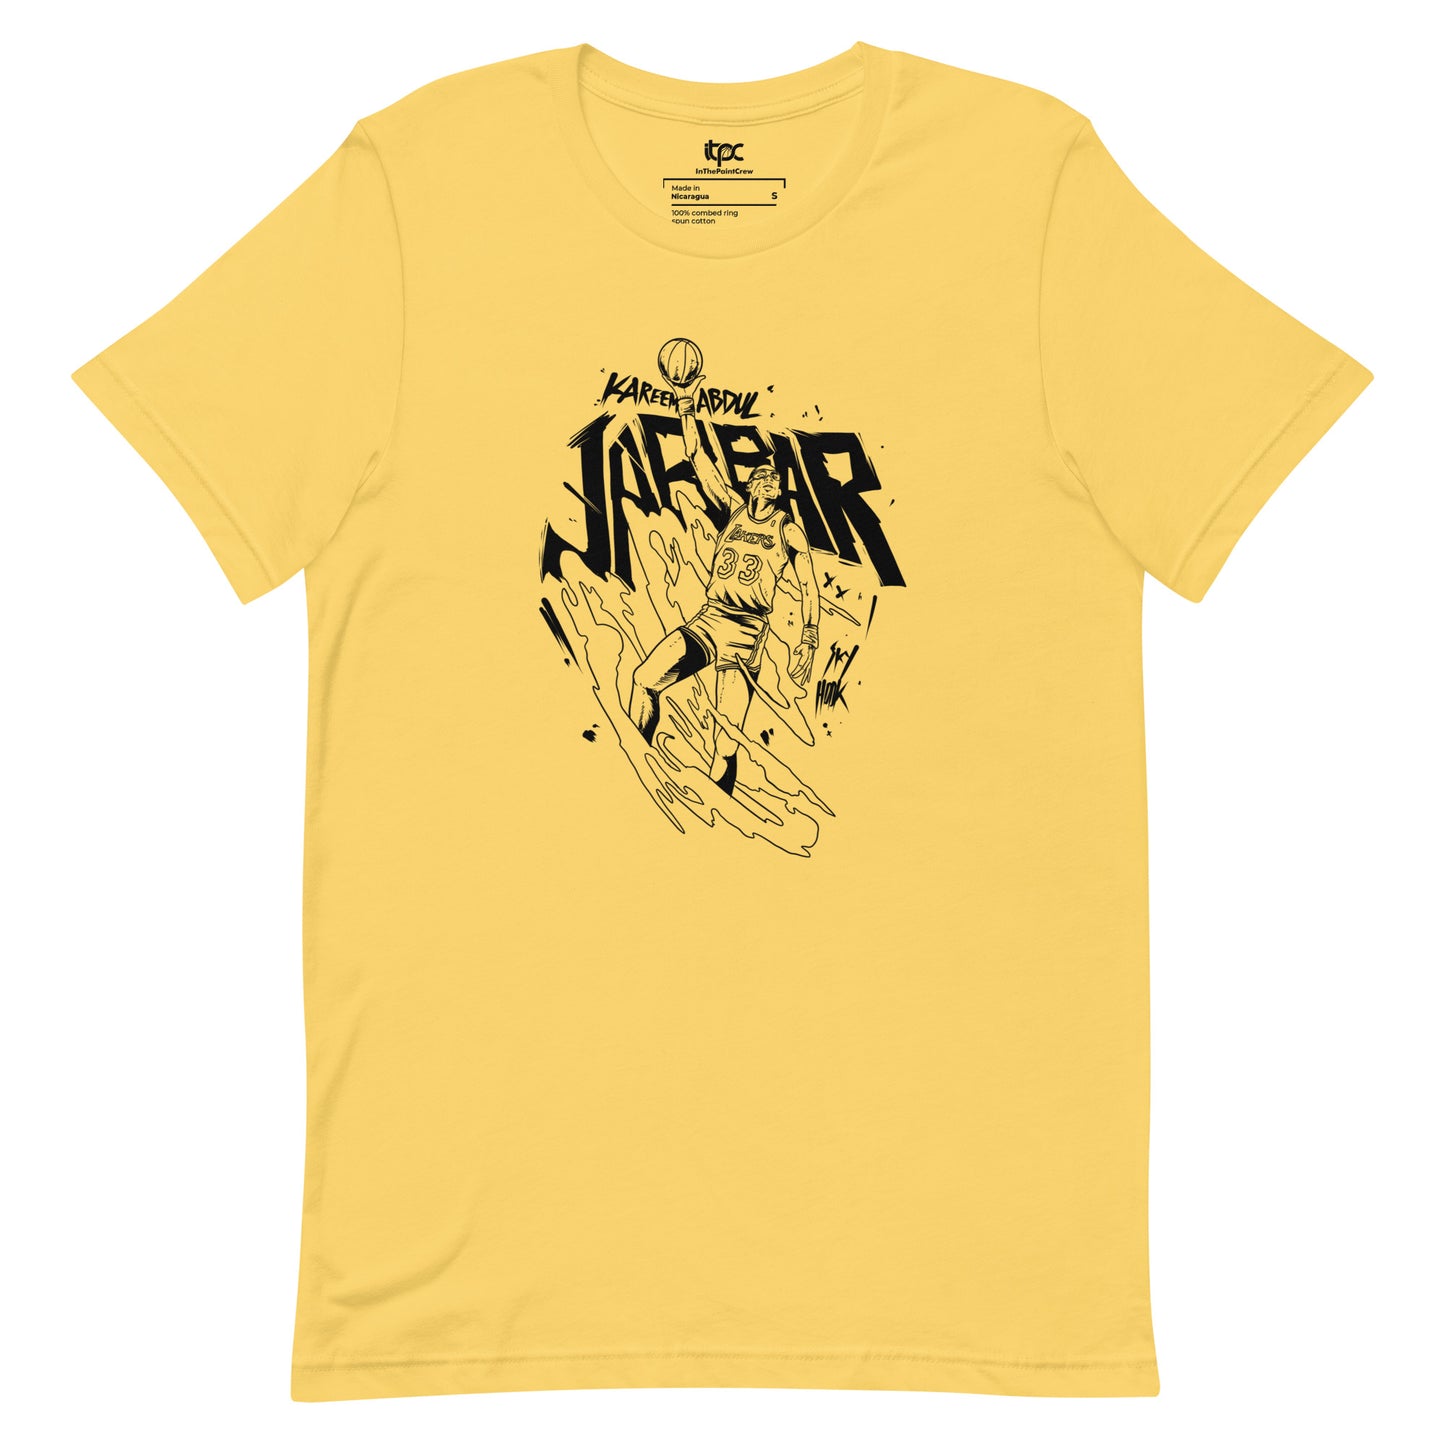 Kareem Abdul-Jabbar - "Sky Hook" t-shirt